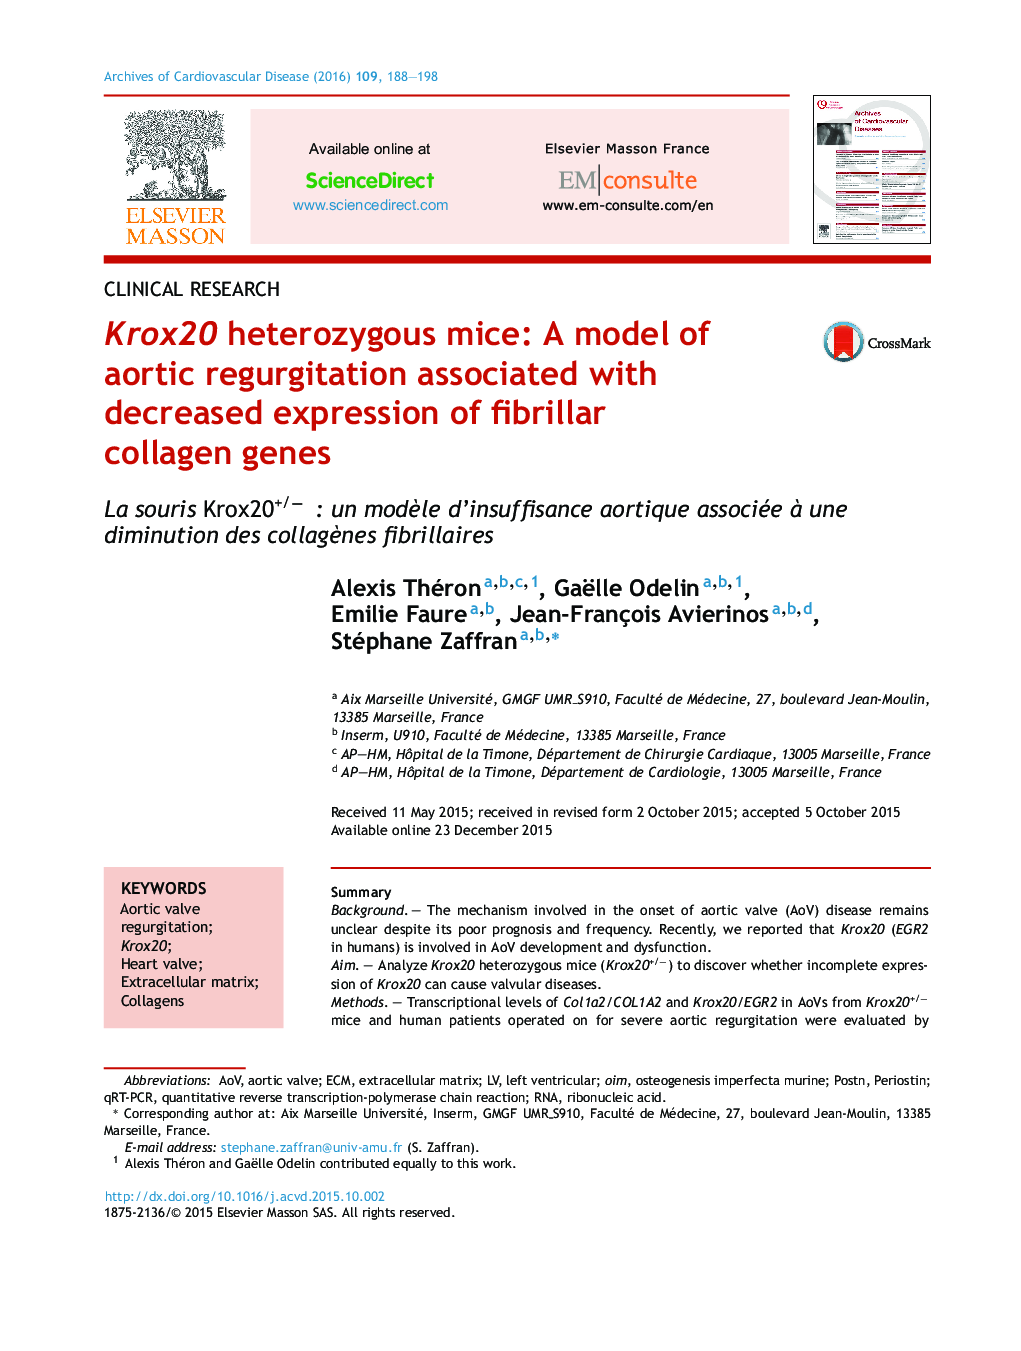 Krox20 heterozygous mice: A model of aortic regurgitation associated with decreased expression of fibrillar collagen genes